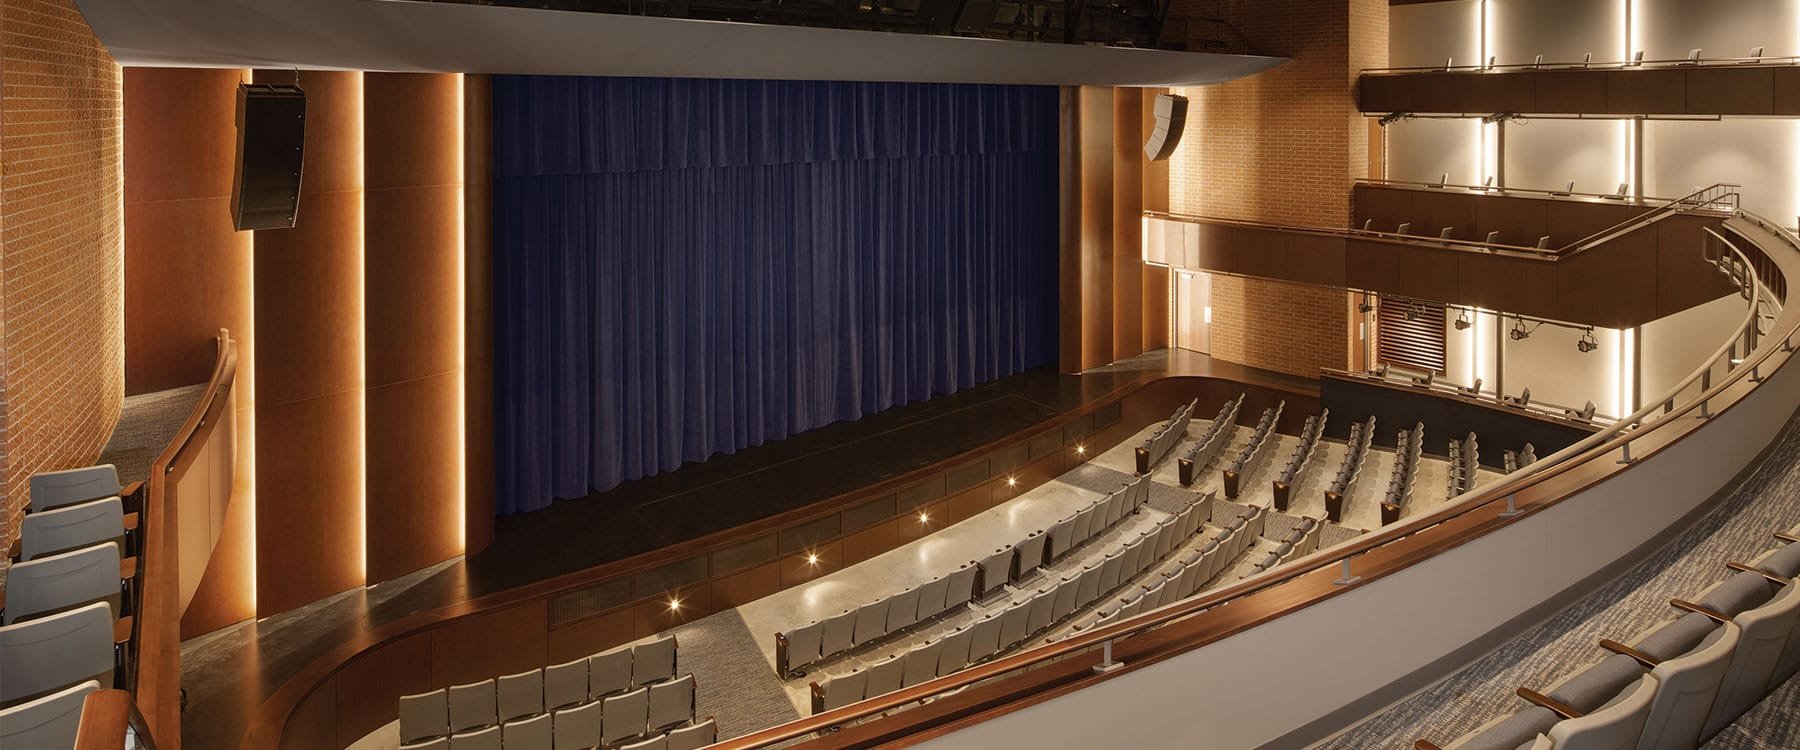 McFarland School District - High School Performing Arts Center